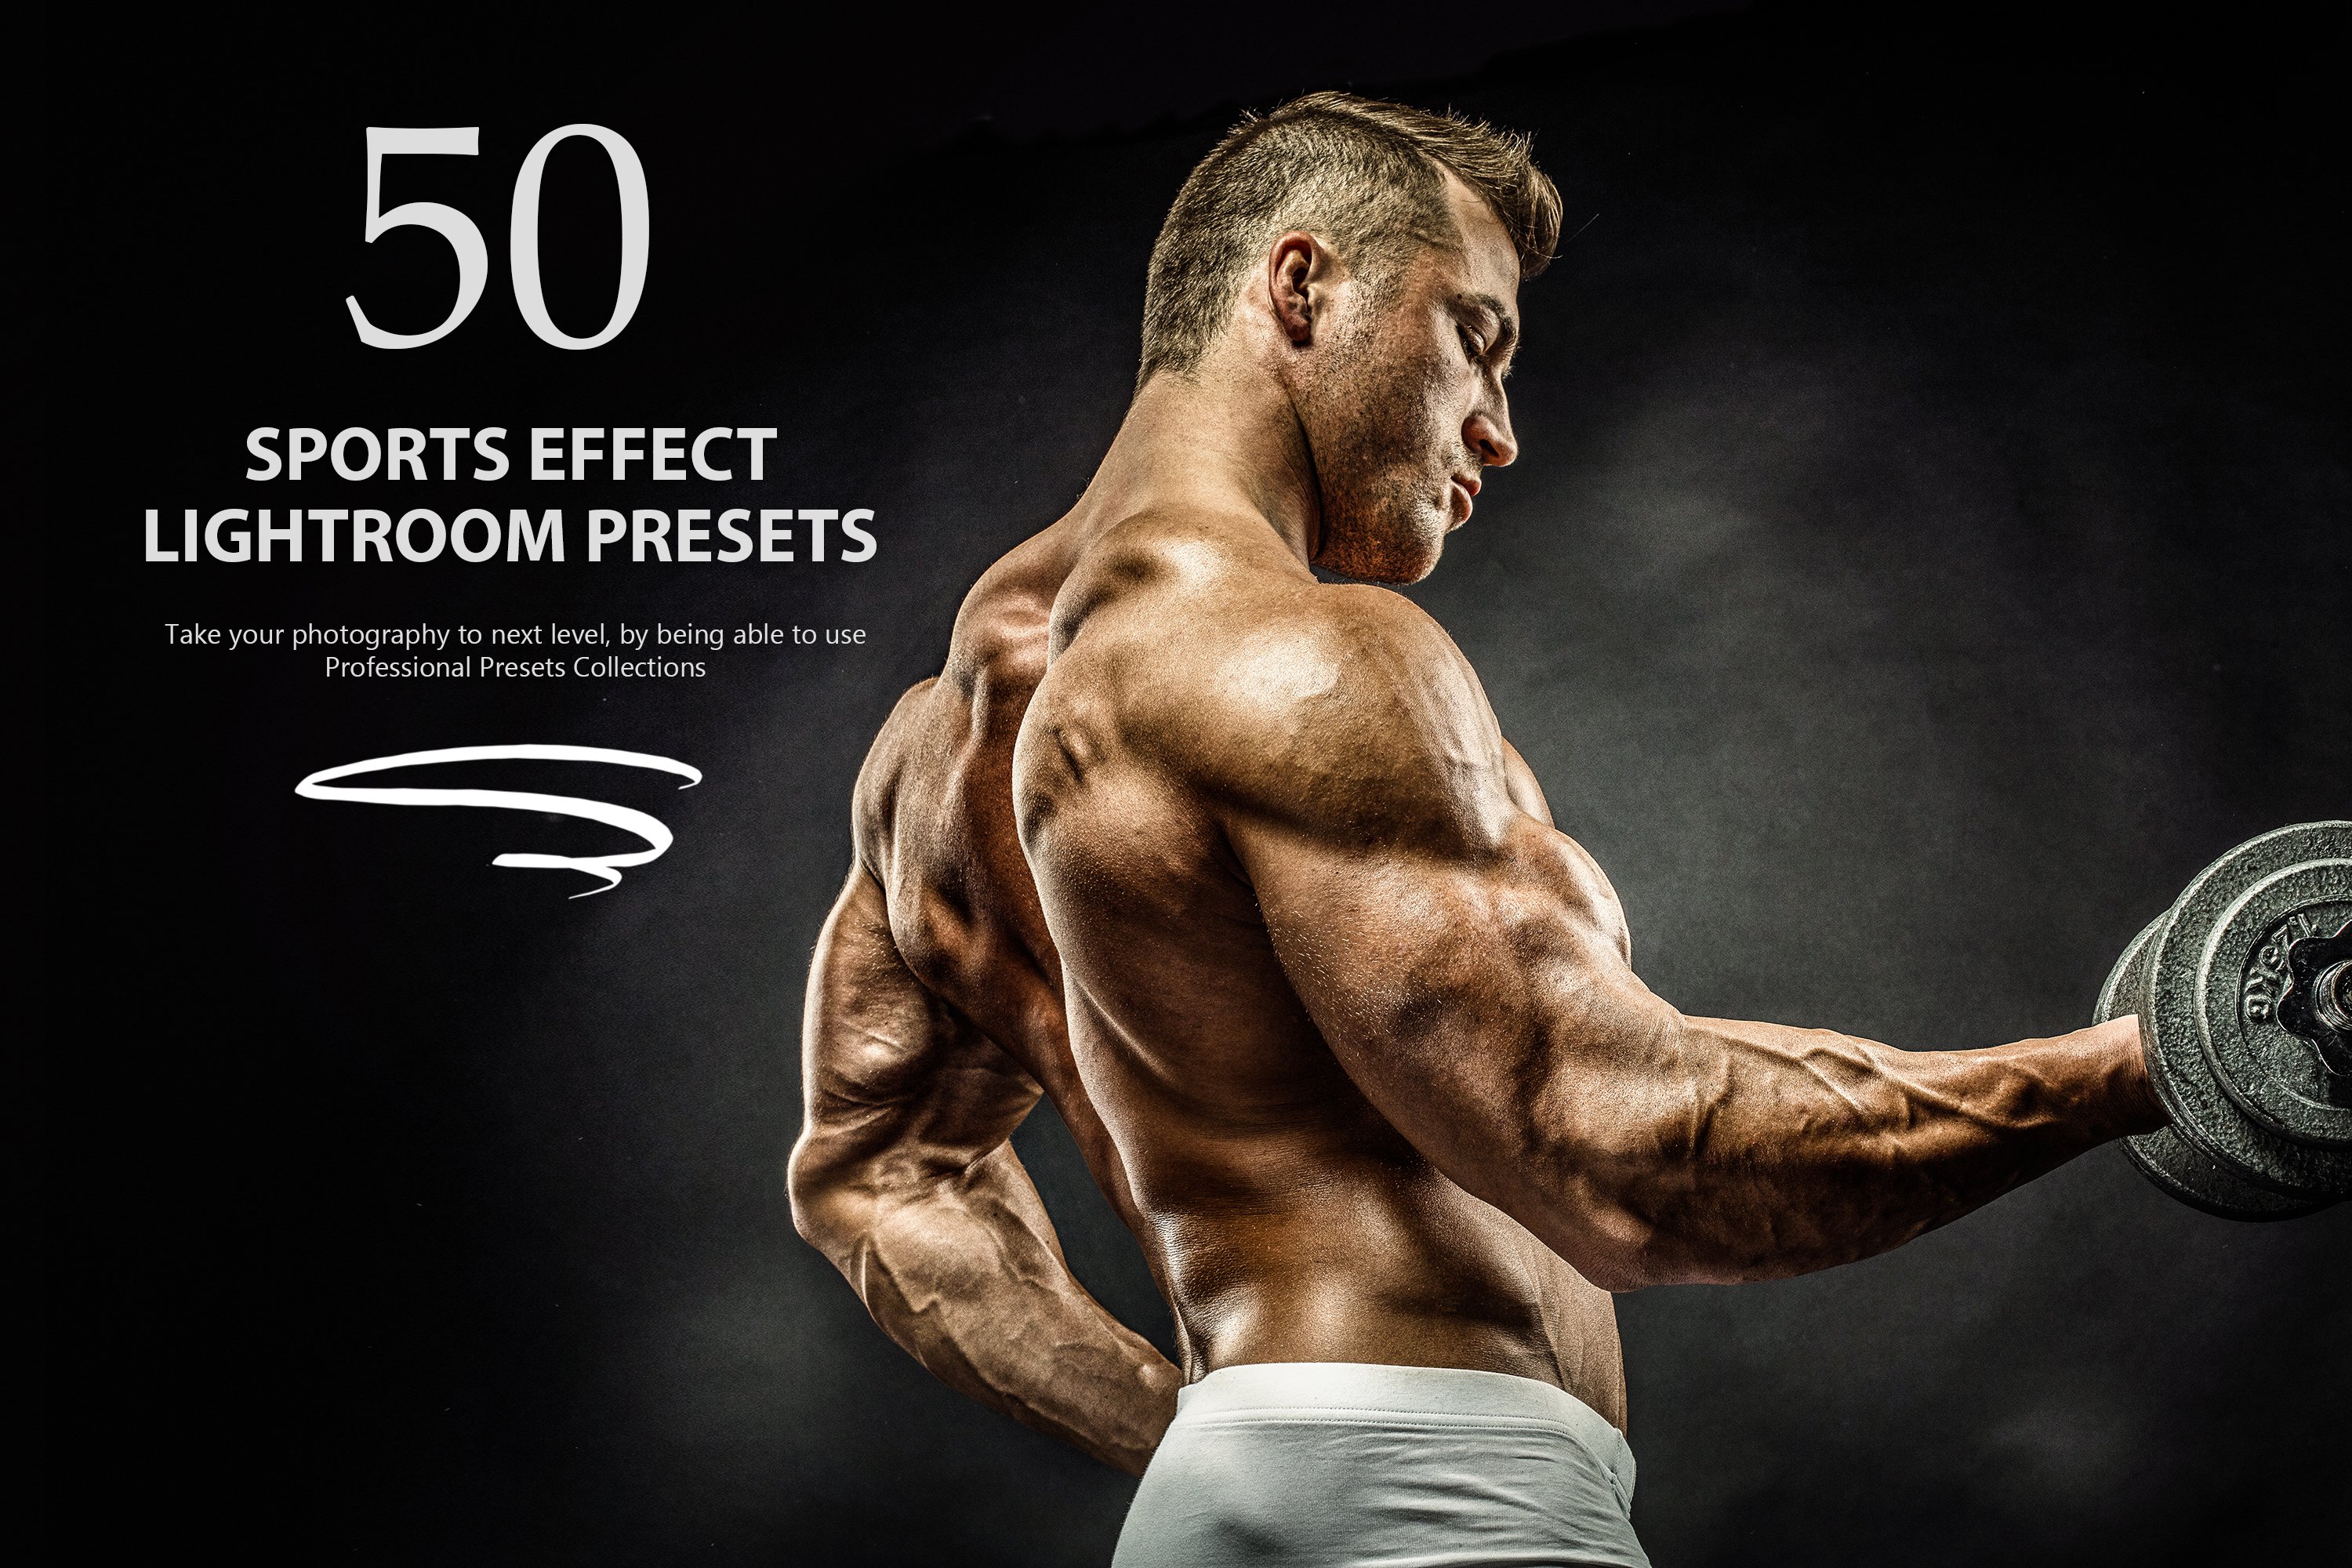 50 Sports Effect Lightroom Presetscover image.